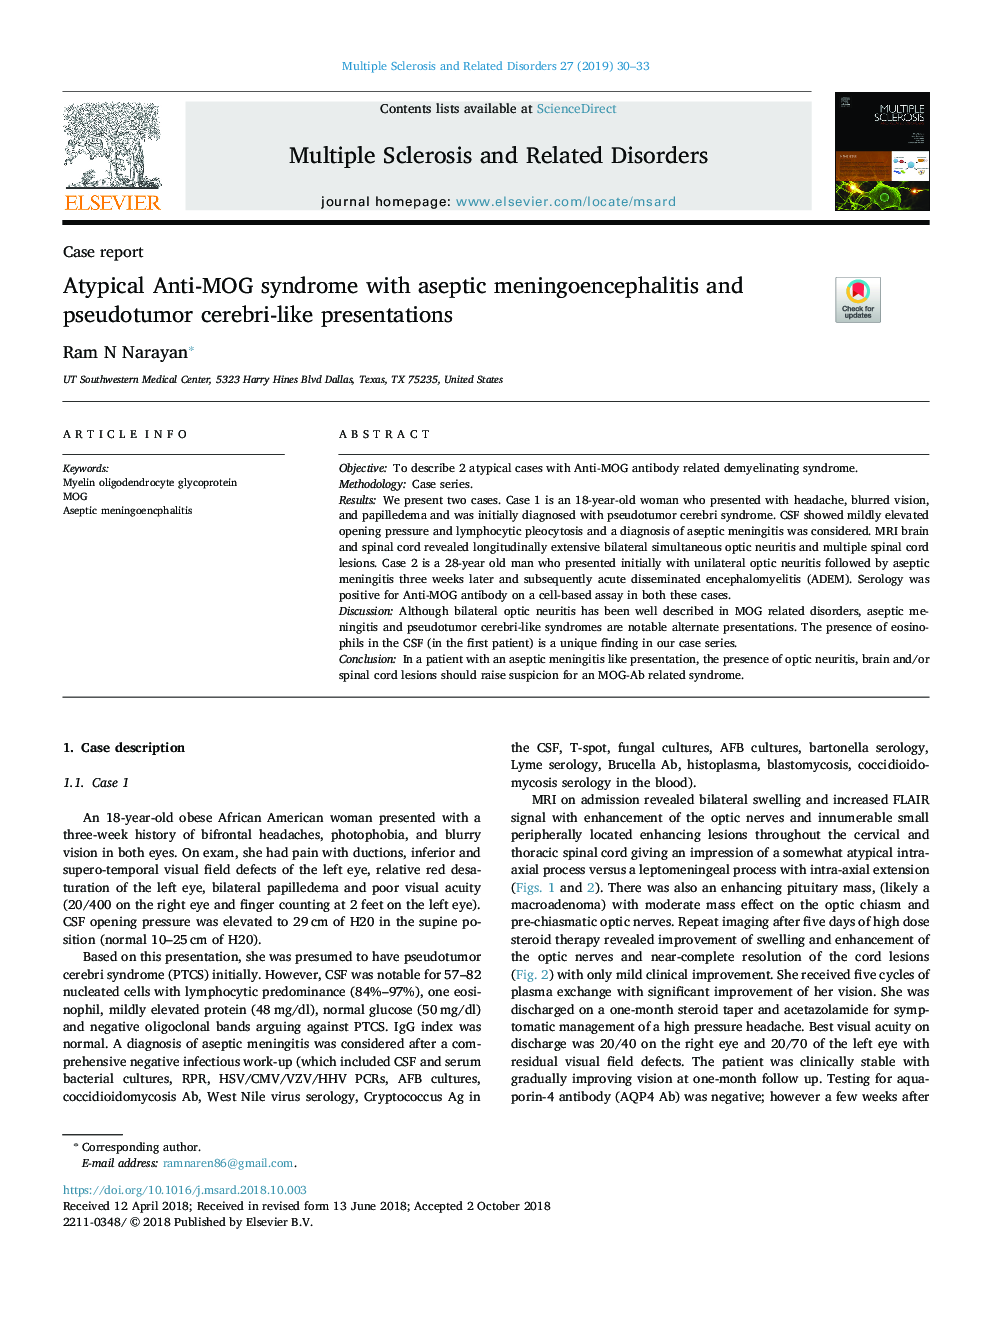 Atypical Anti-MOG syndrome with aseptic meningoencephalitis and pseudotumor cerebri-like presentations